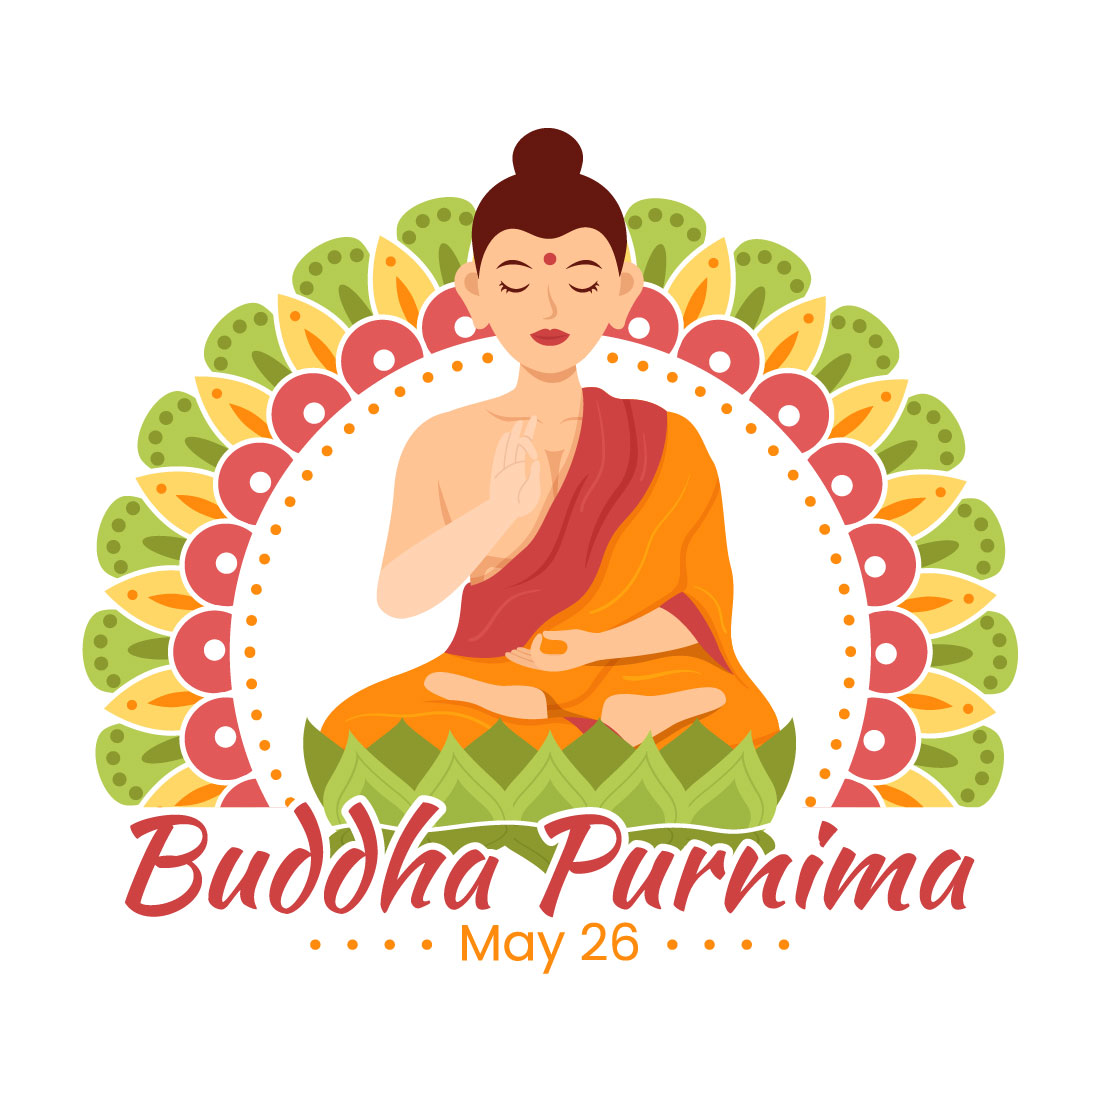 14 Happy Buddha Purnima Illustration preview image.